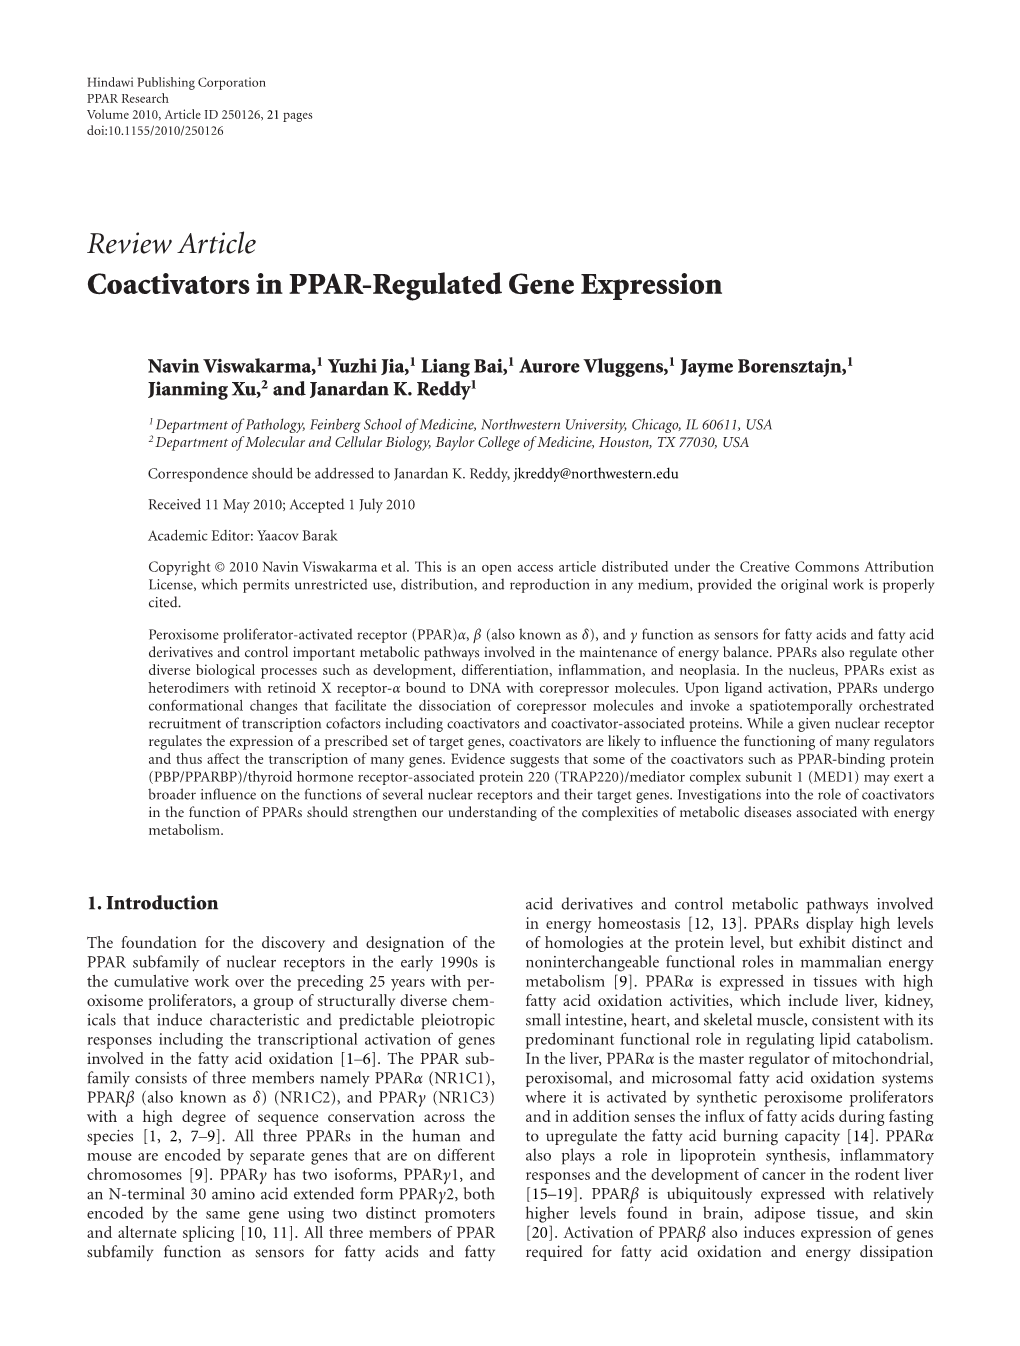 Coactivators in PPAR-Regulated Gene Expression